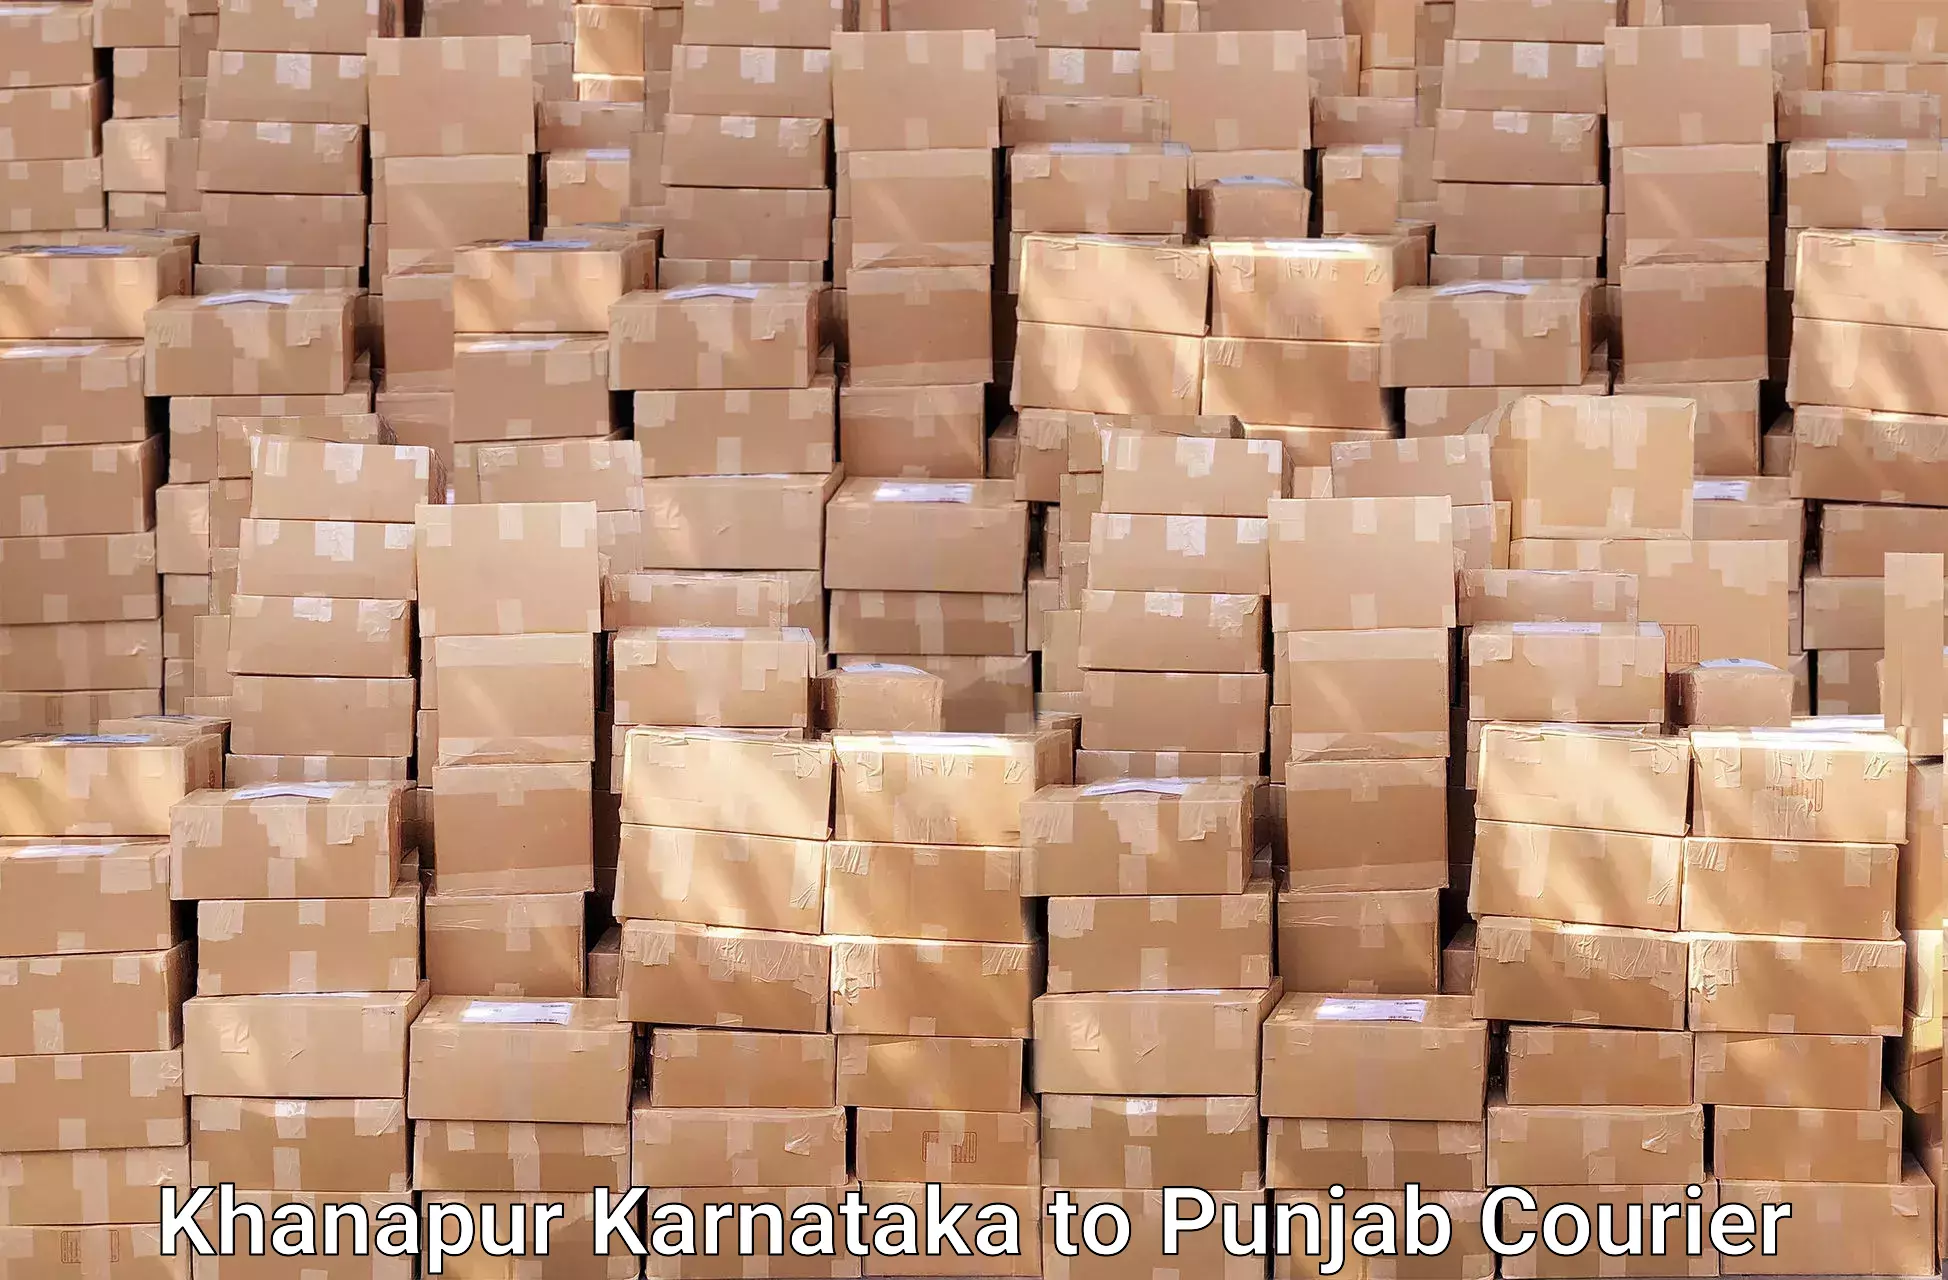 Professional packing and transport Khanapur Karnataka to Kapurthala